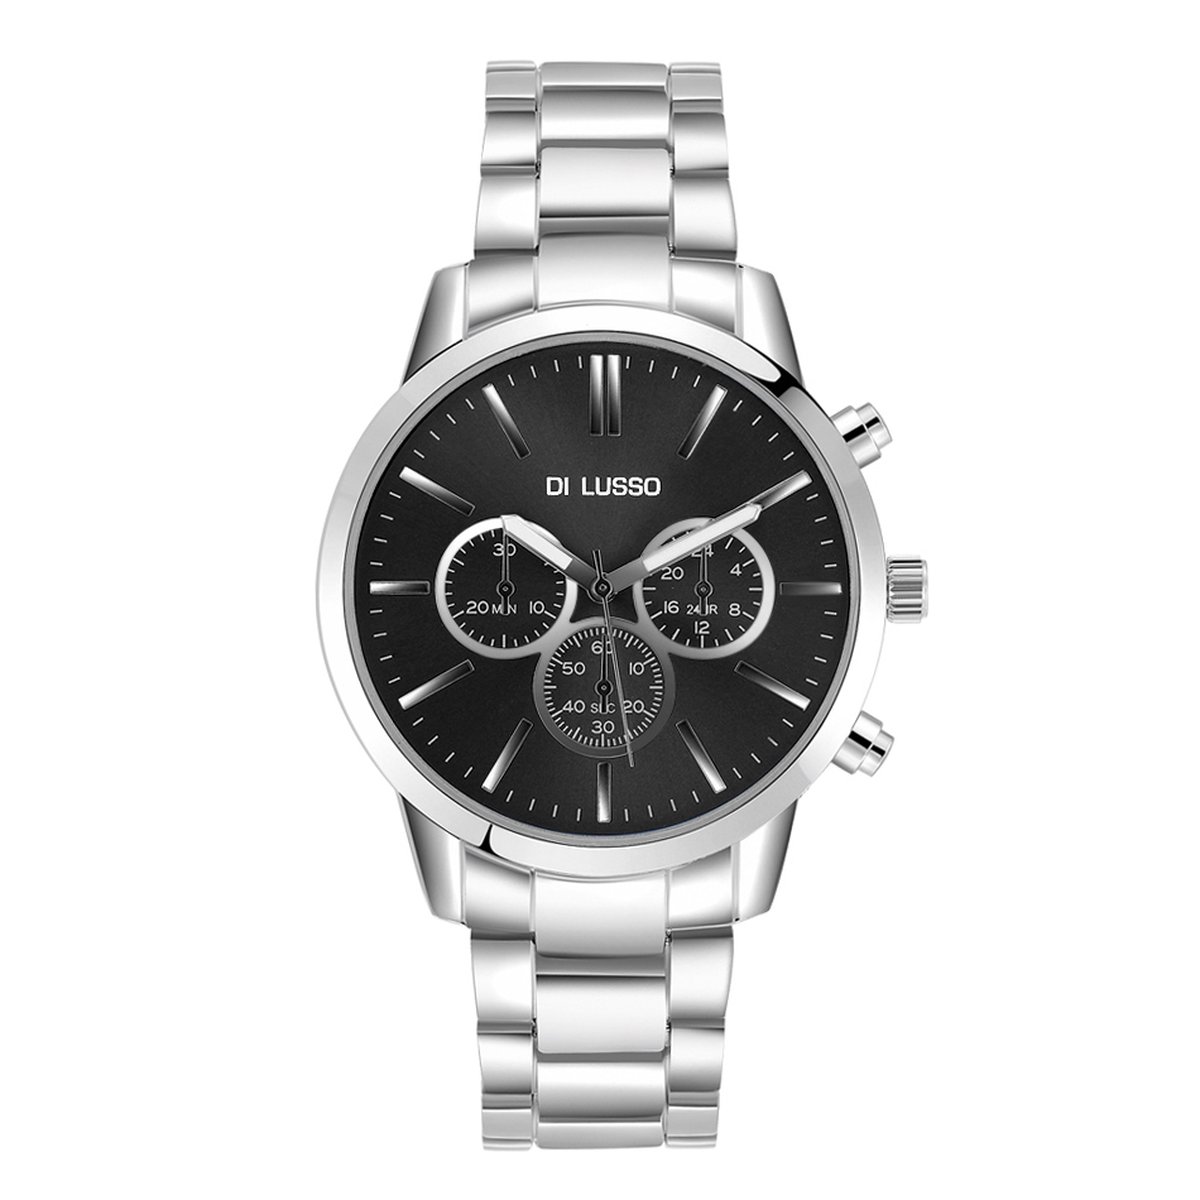 Di Lusso - Horloge Brendon - Zilverkleurig - Japans uurwerk